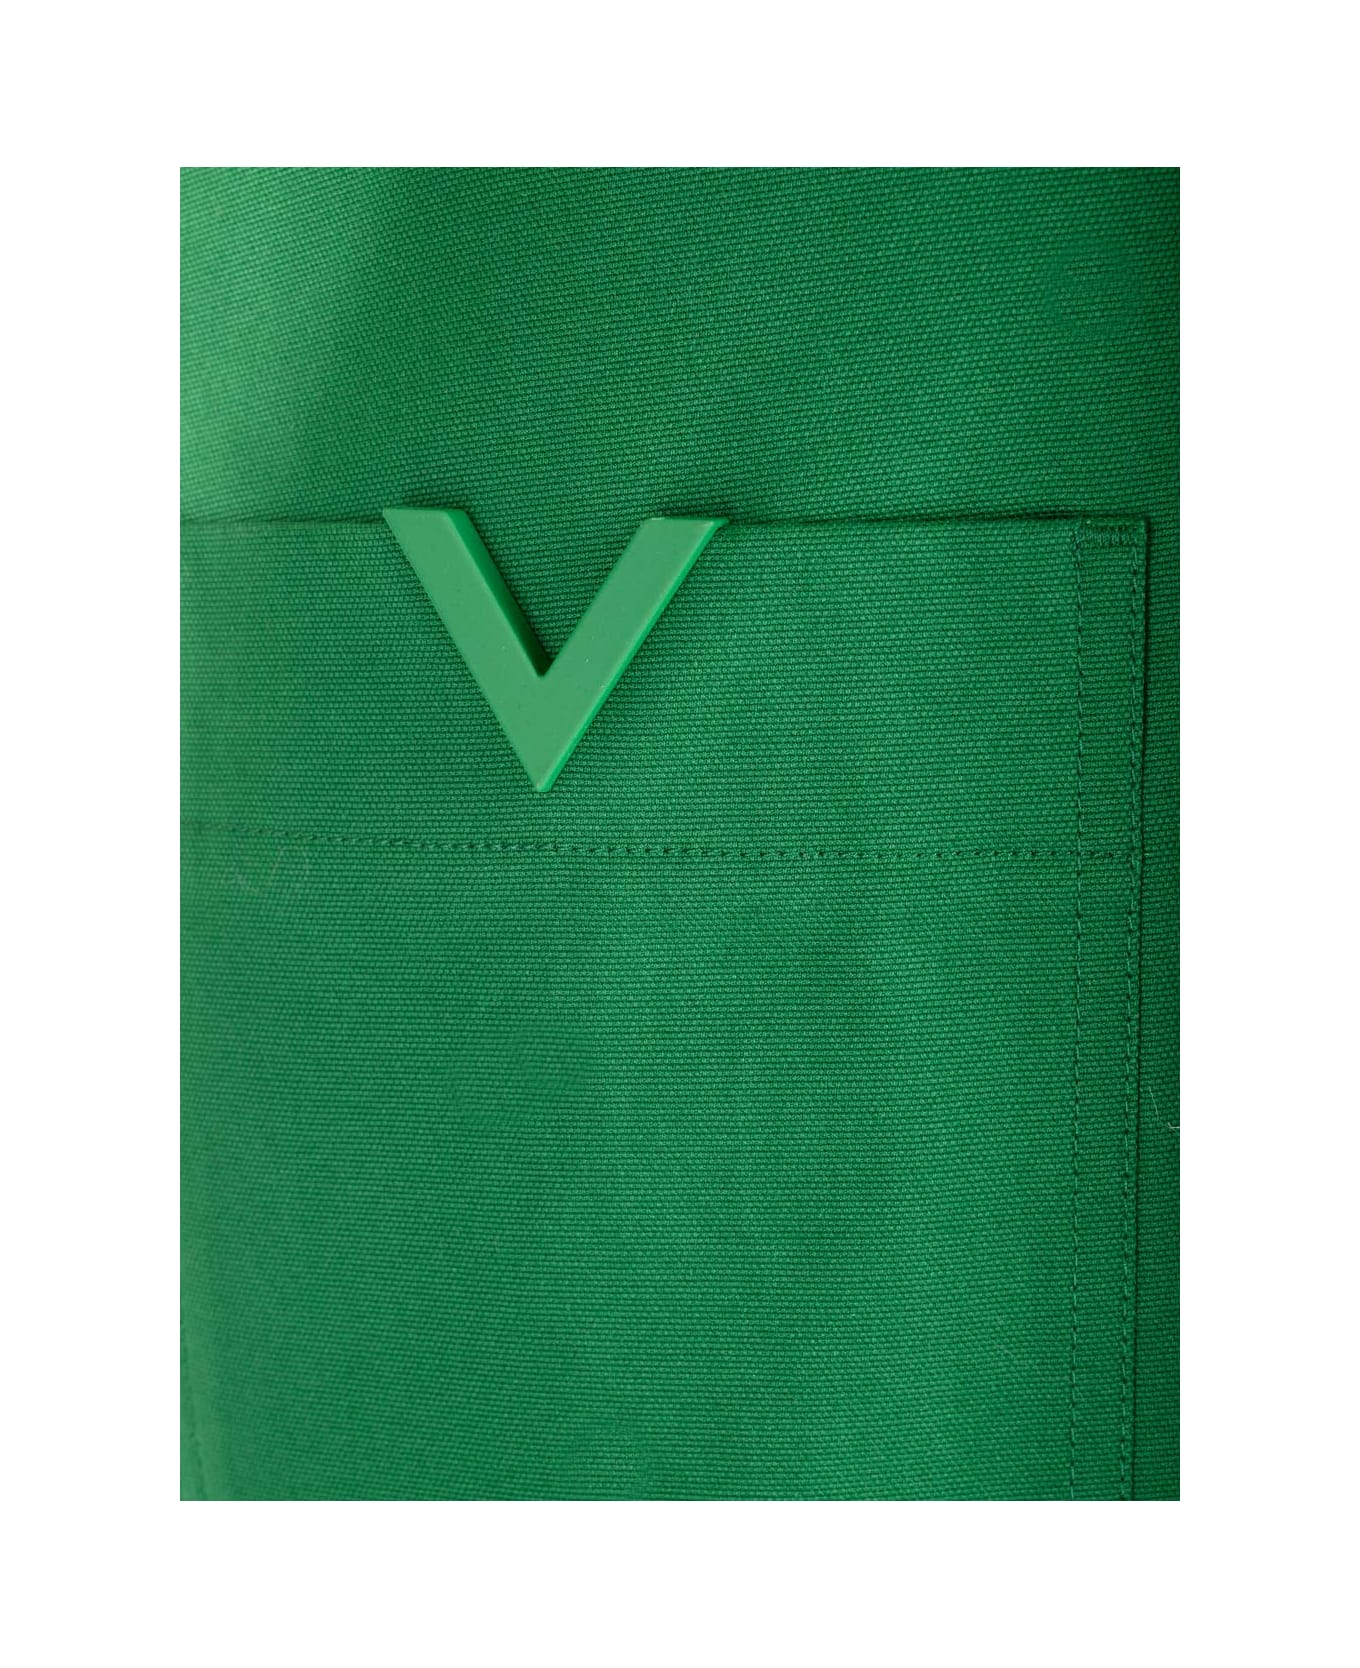 Valentino 'v Logo' Detail Bermuda Shorts - Green